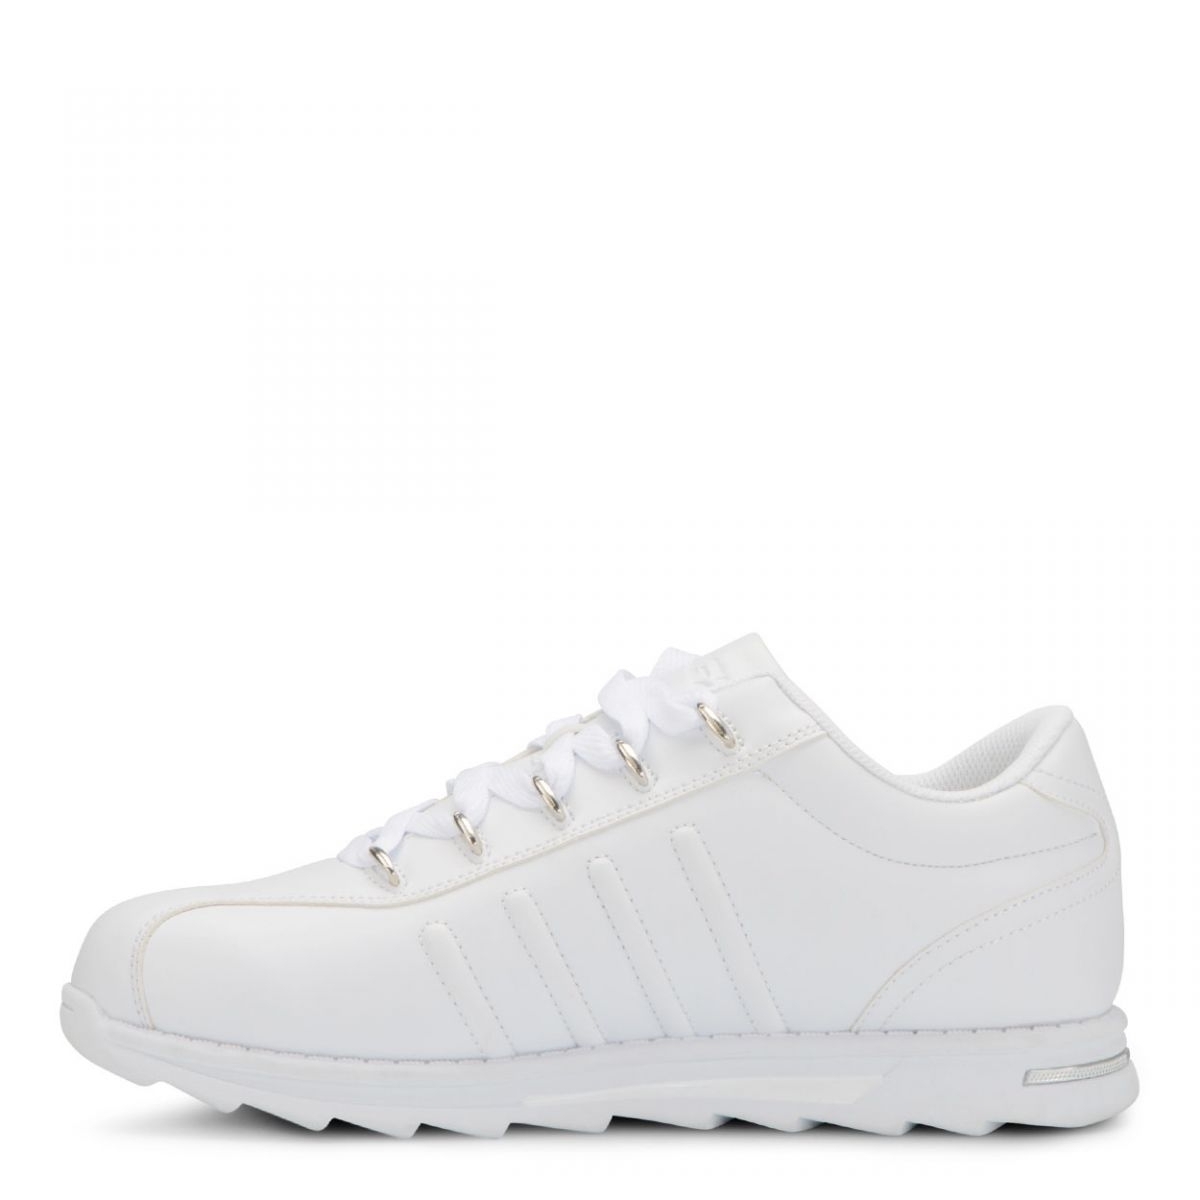 Lugz Men's Changeover II Sneaker White - MCHGIIV-100 WHITE - WHITE, 8.5